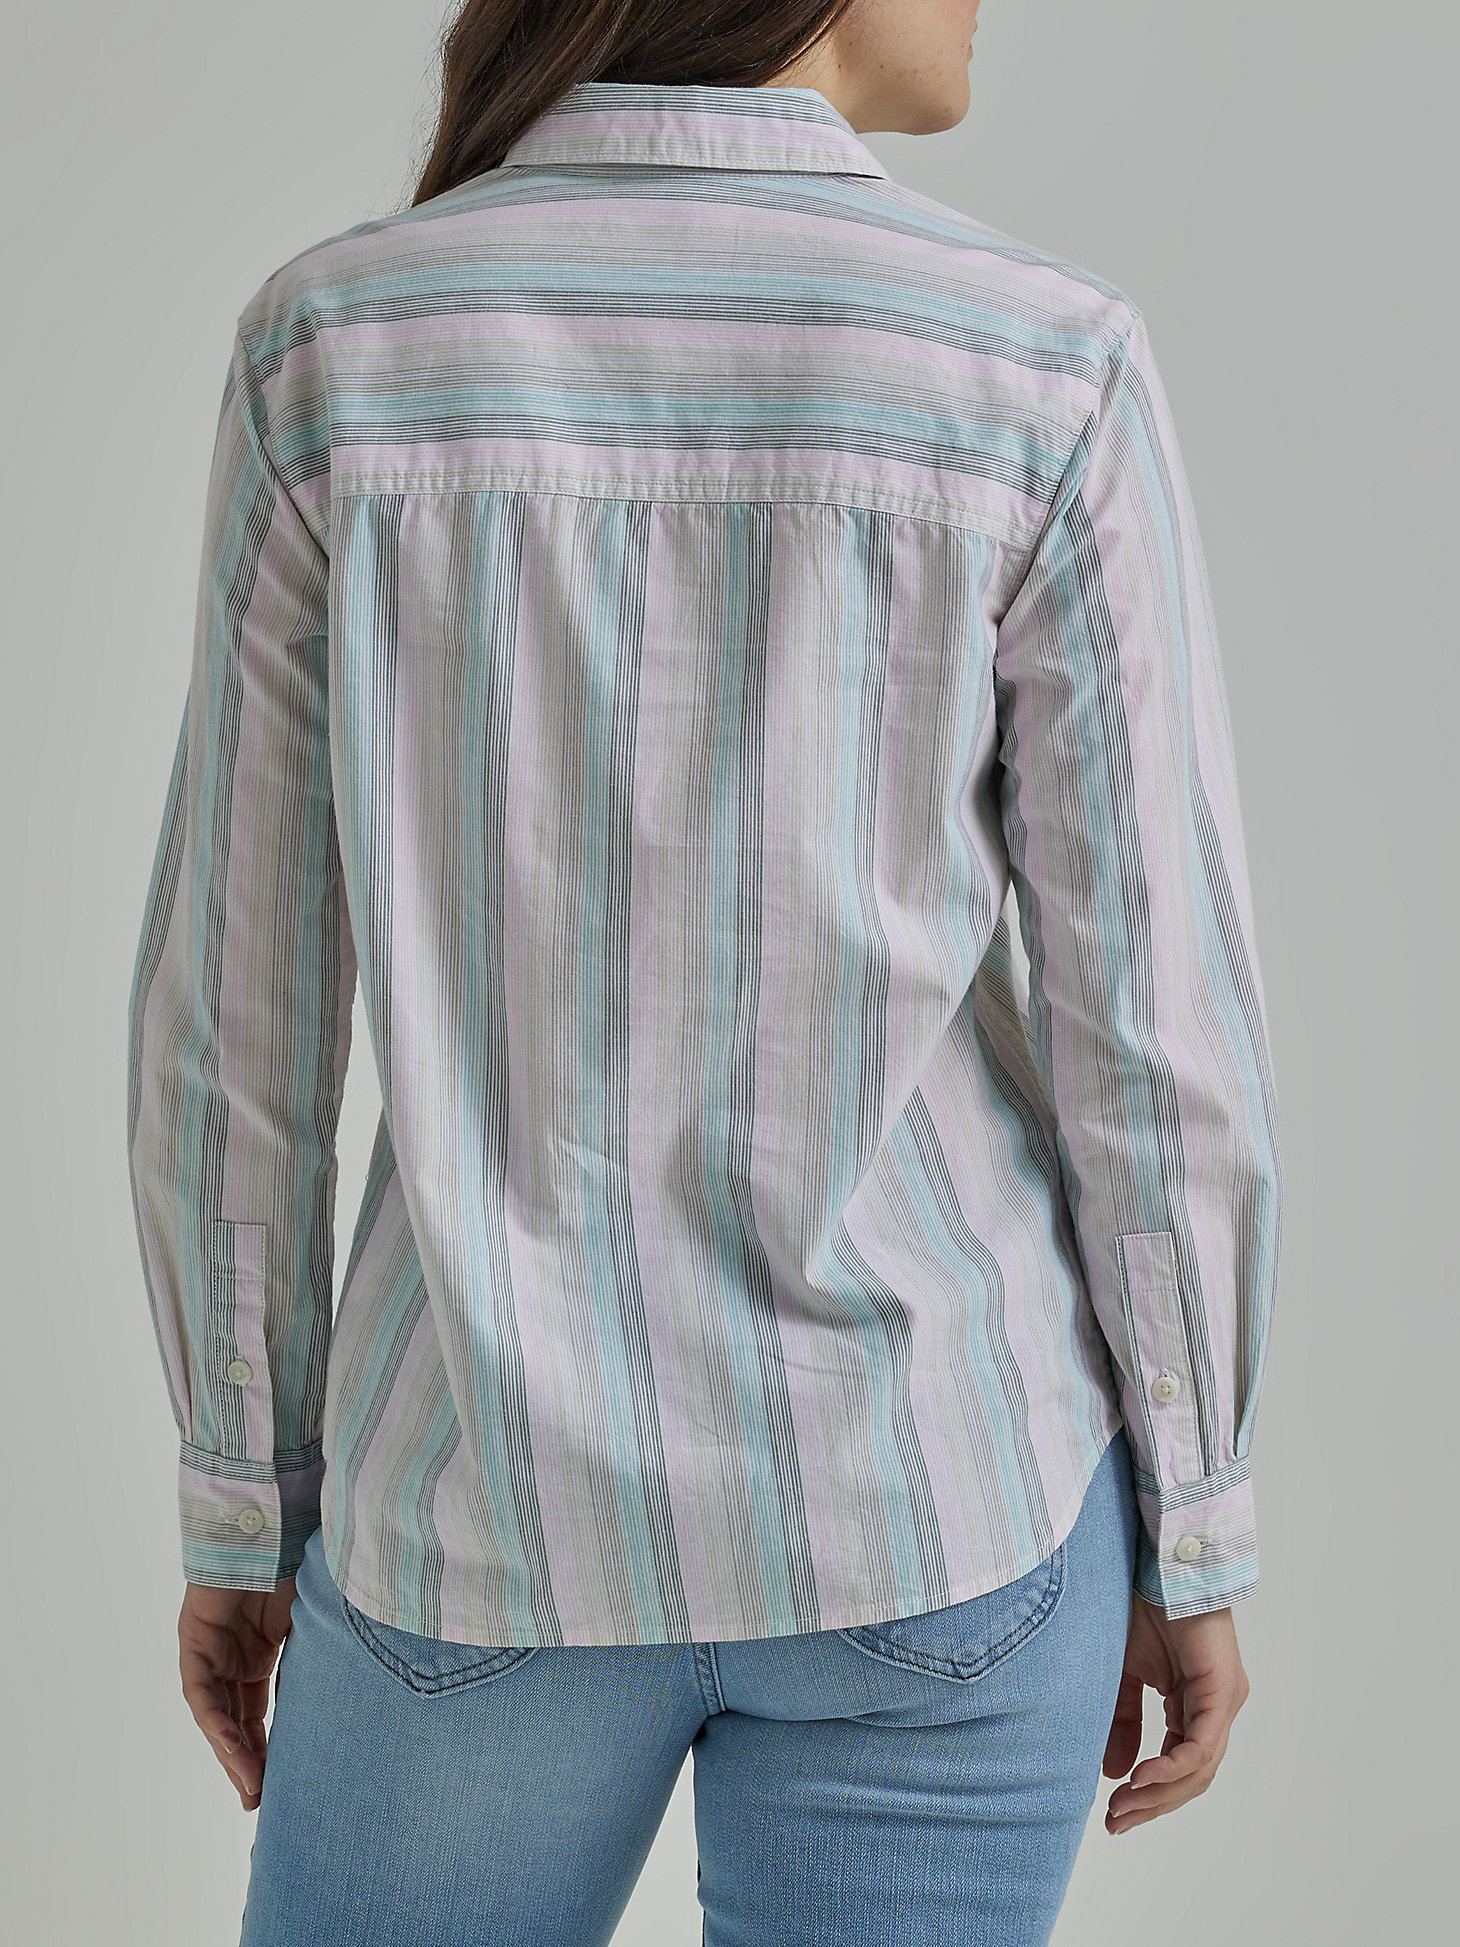 Women's Legendary All Purpose Stripe Button Down Shirt in Fort Green Stripe alternative view 1